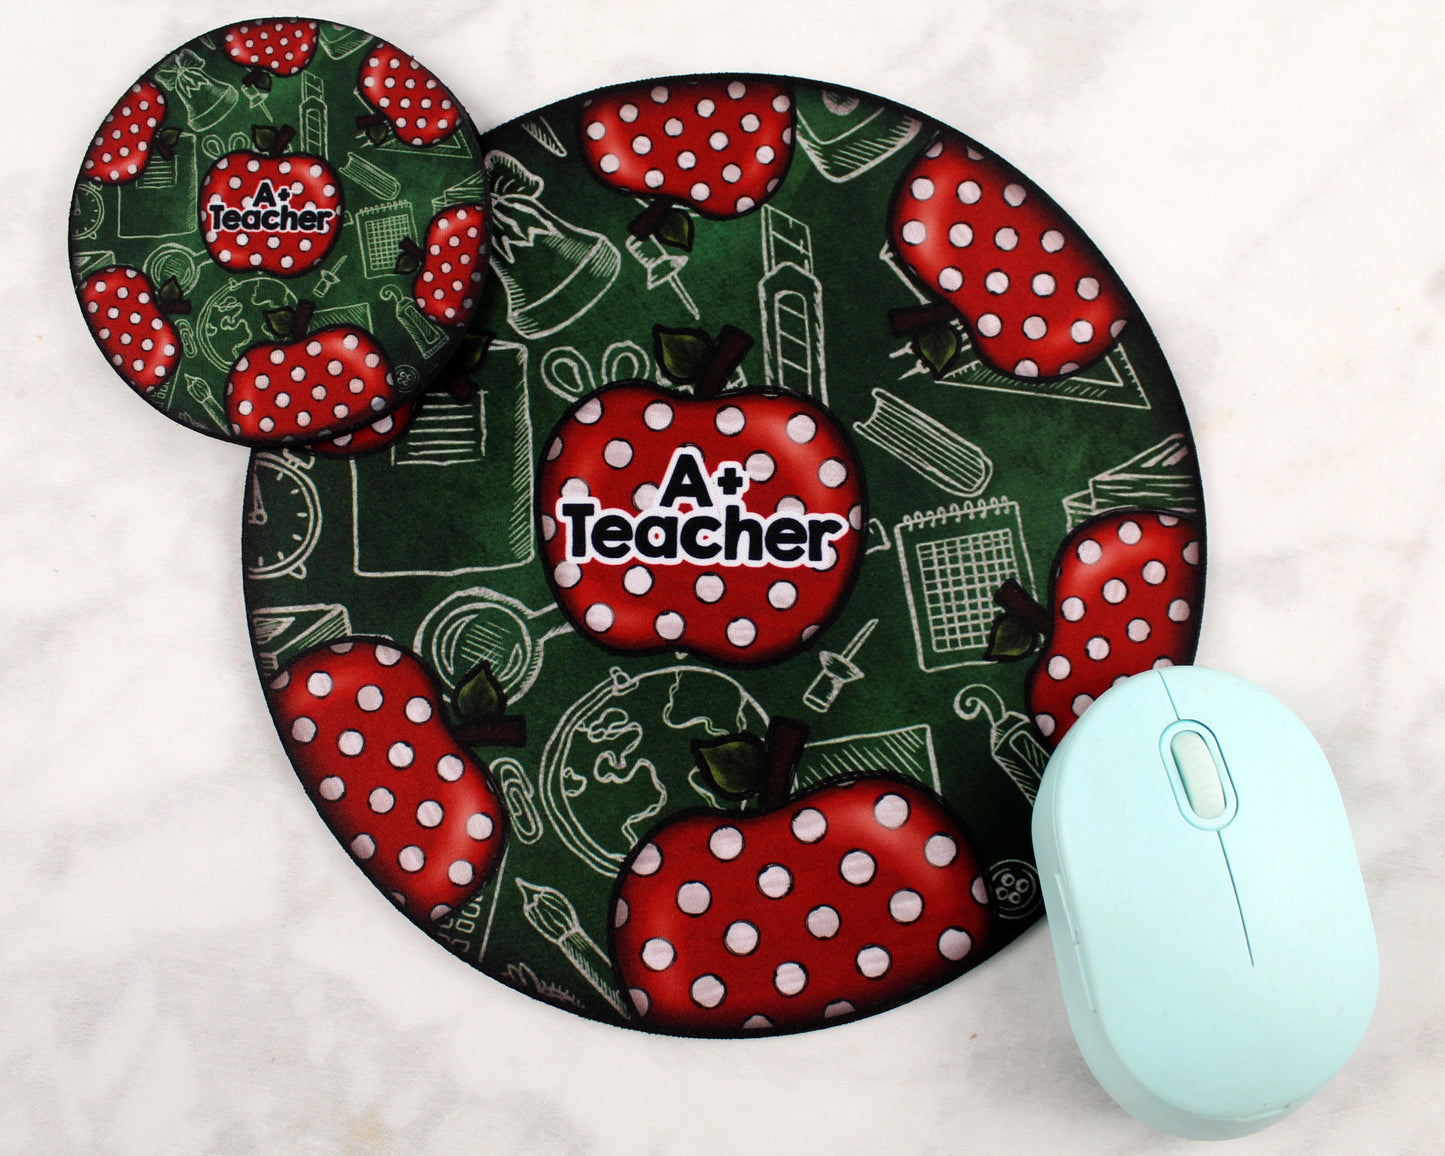 A+ Teacher with Apples Desk Set